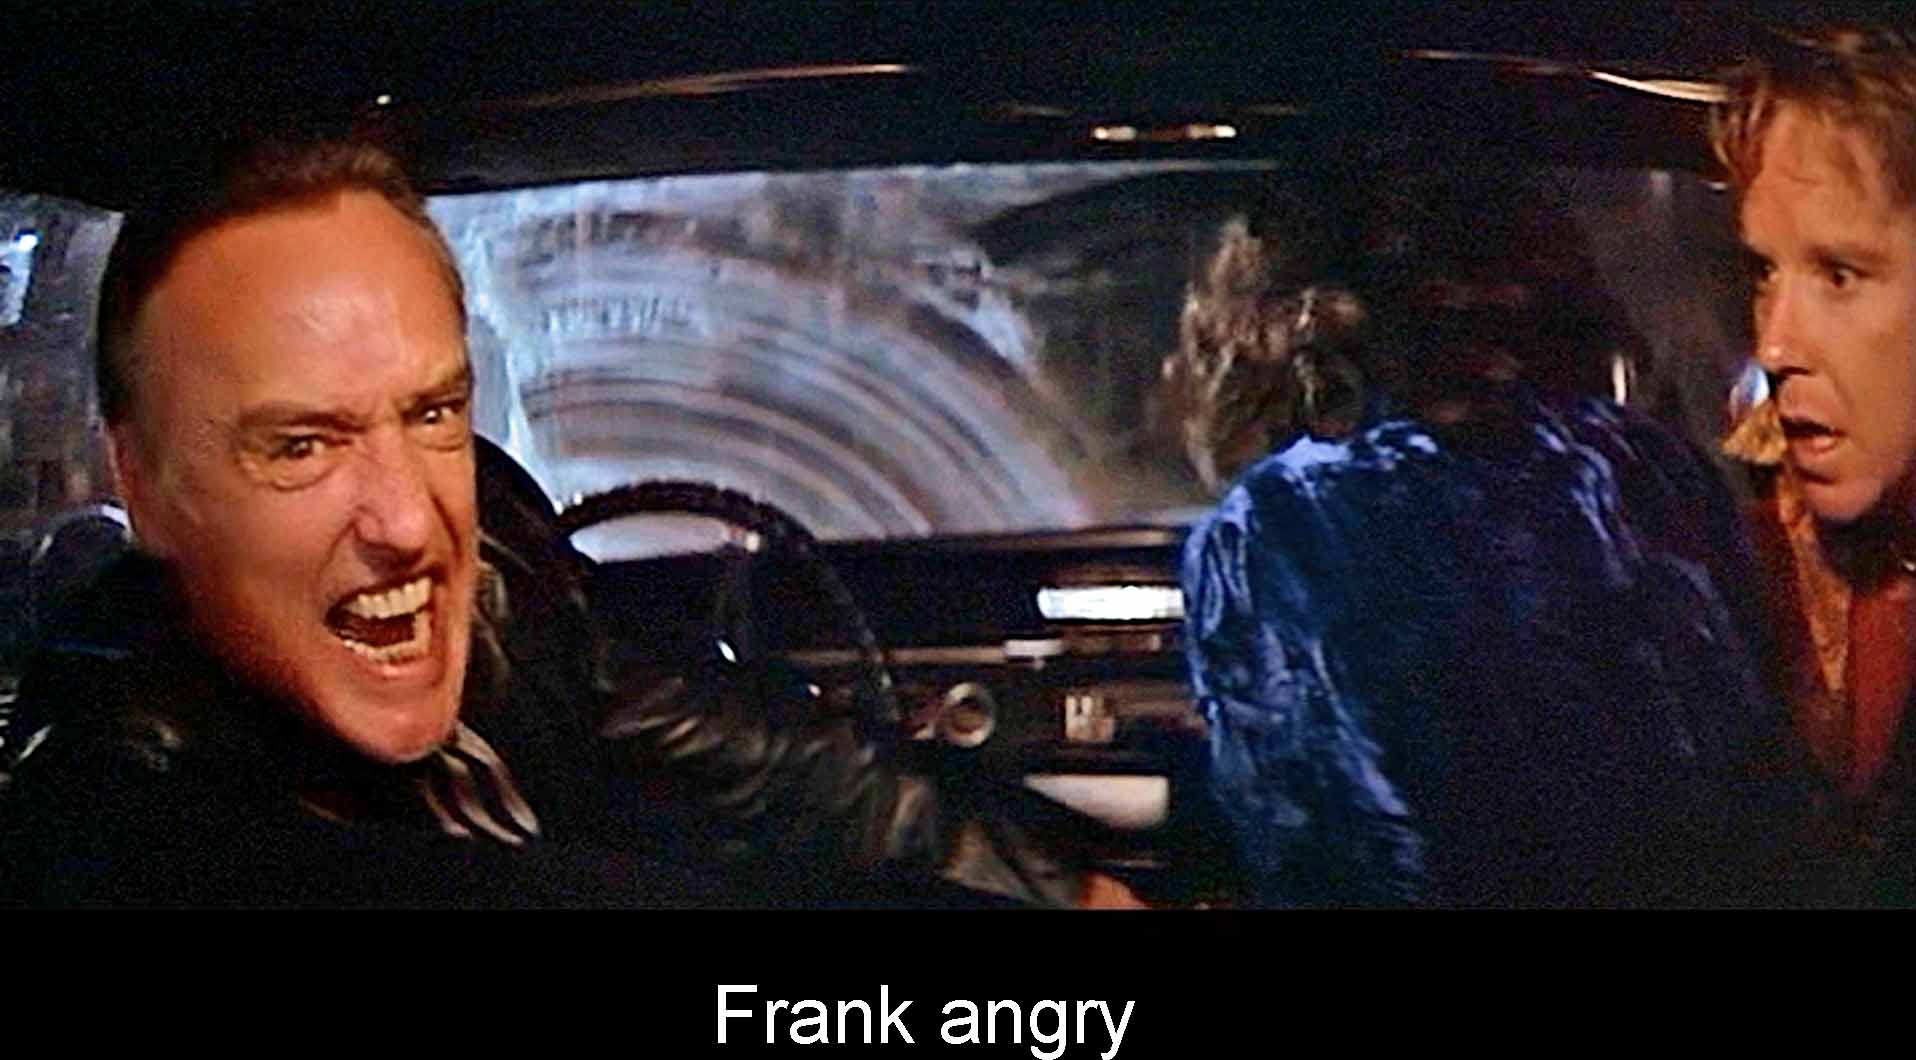 Frank angry